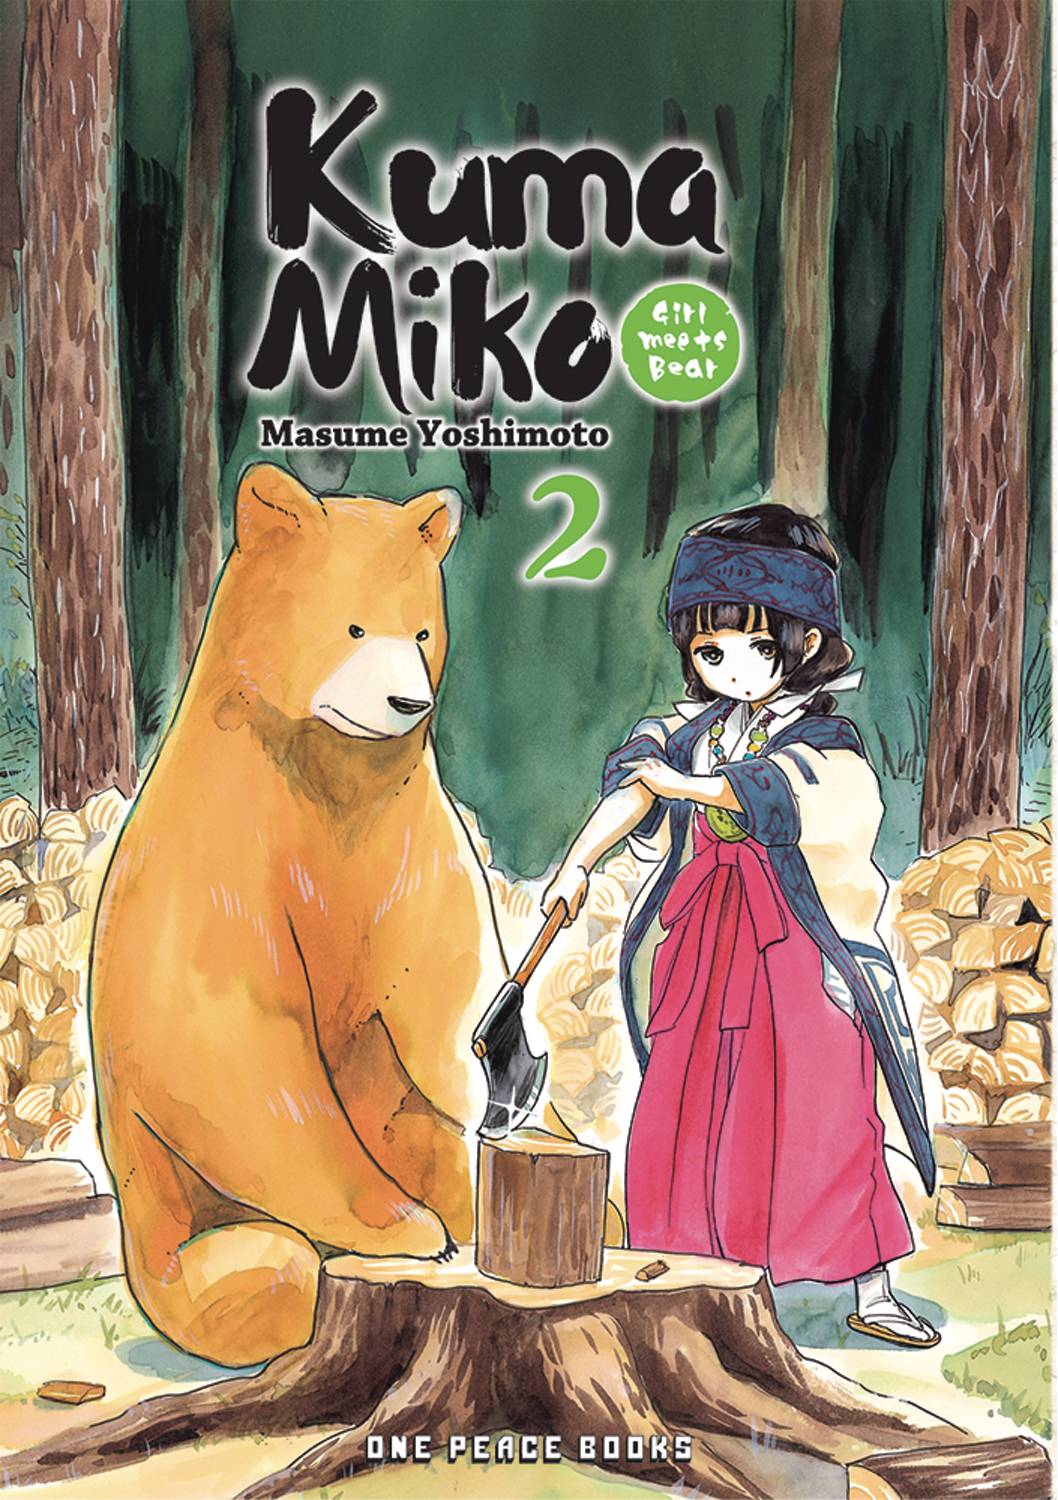 Kuma Miko Girl Meets Bear Manga Volume 2